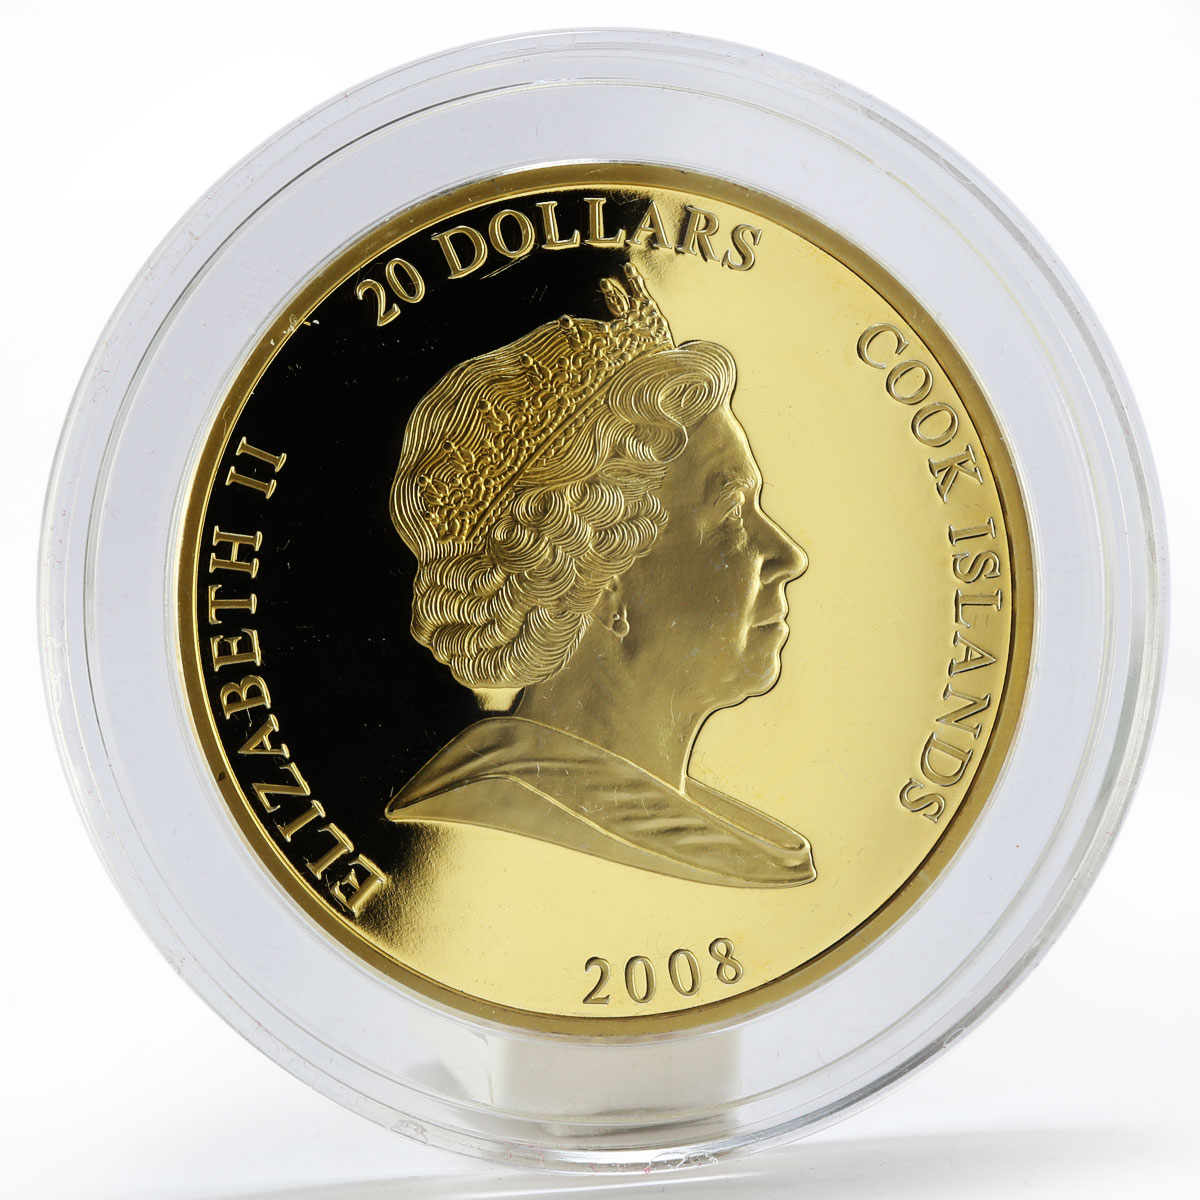 Cook Island 20 dollars Vatican City European Treasuries silver coin 2008